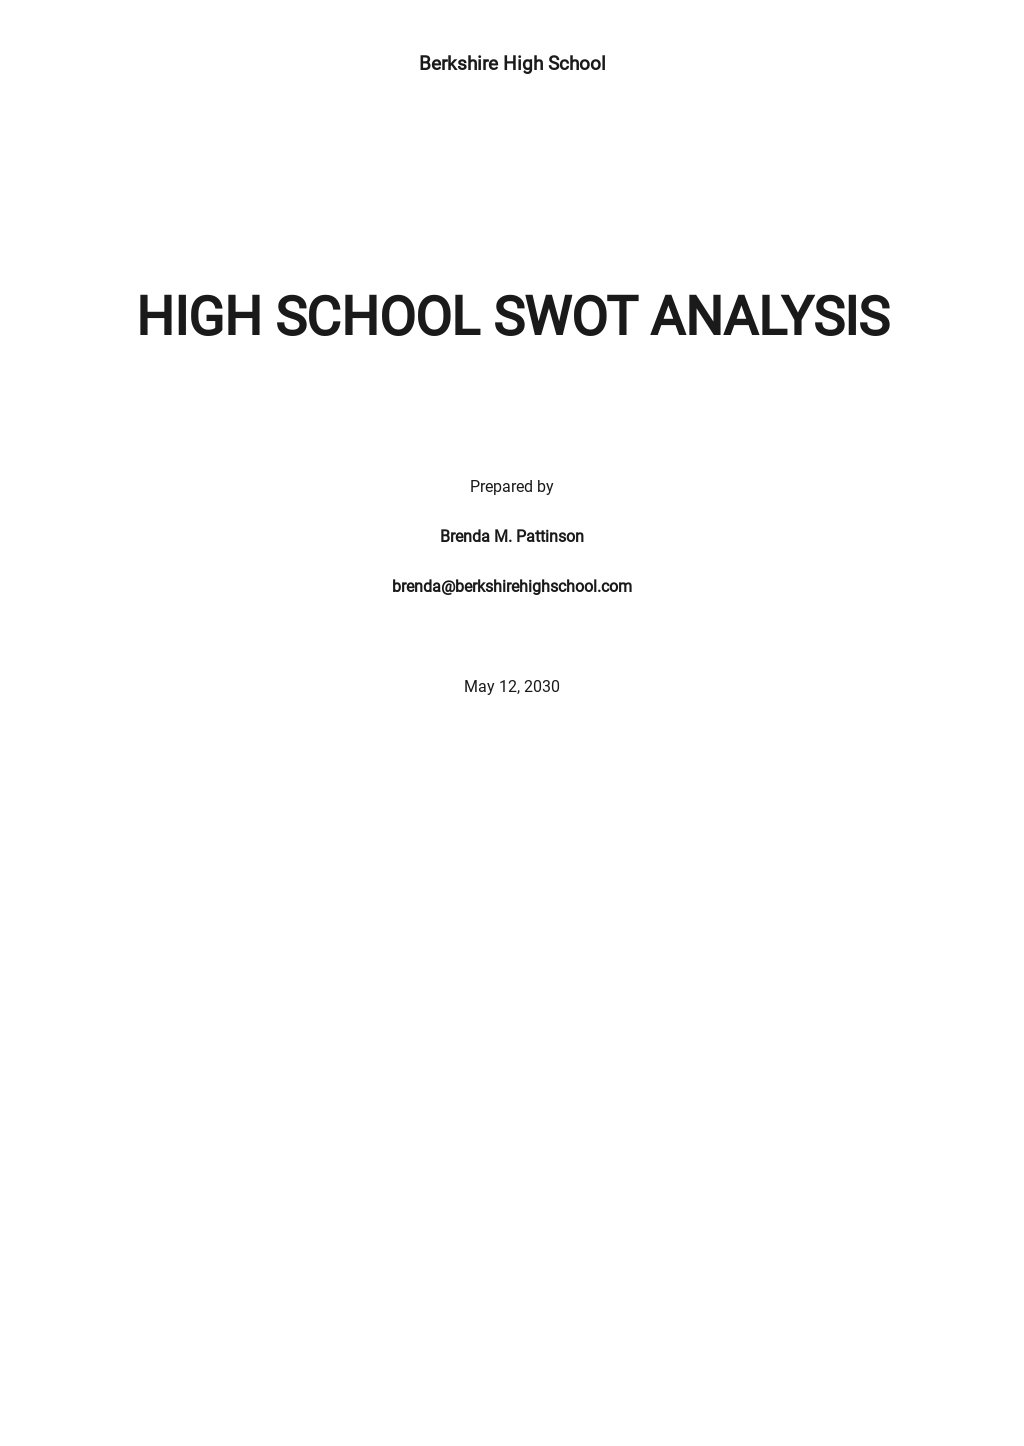 High School Swot Analysis Template.jpe